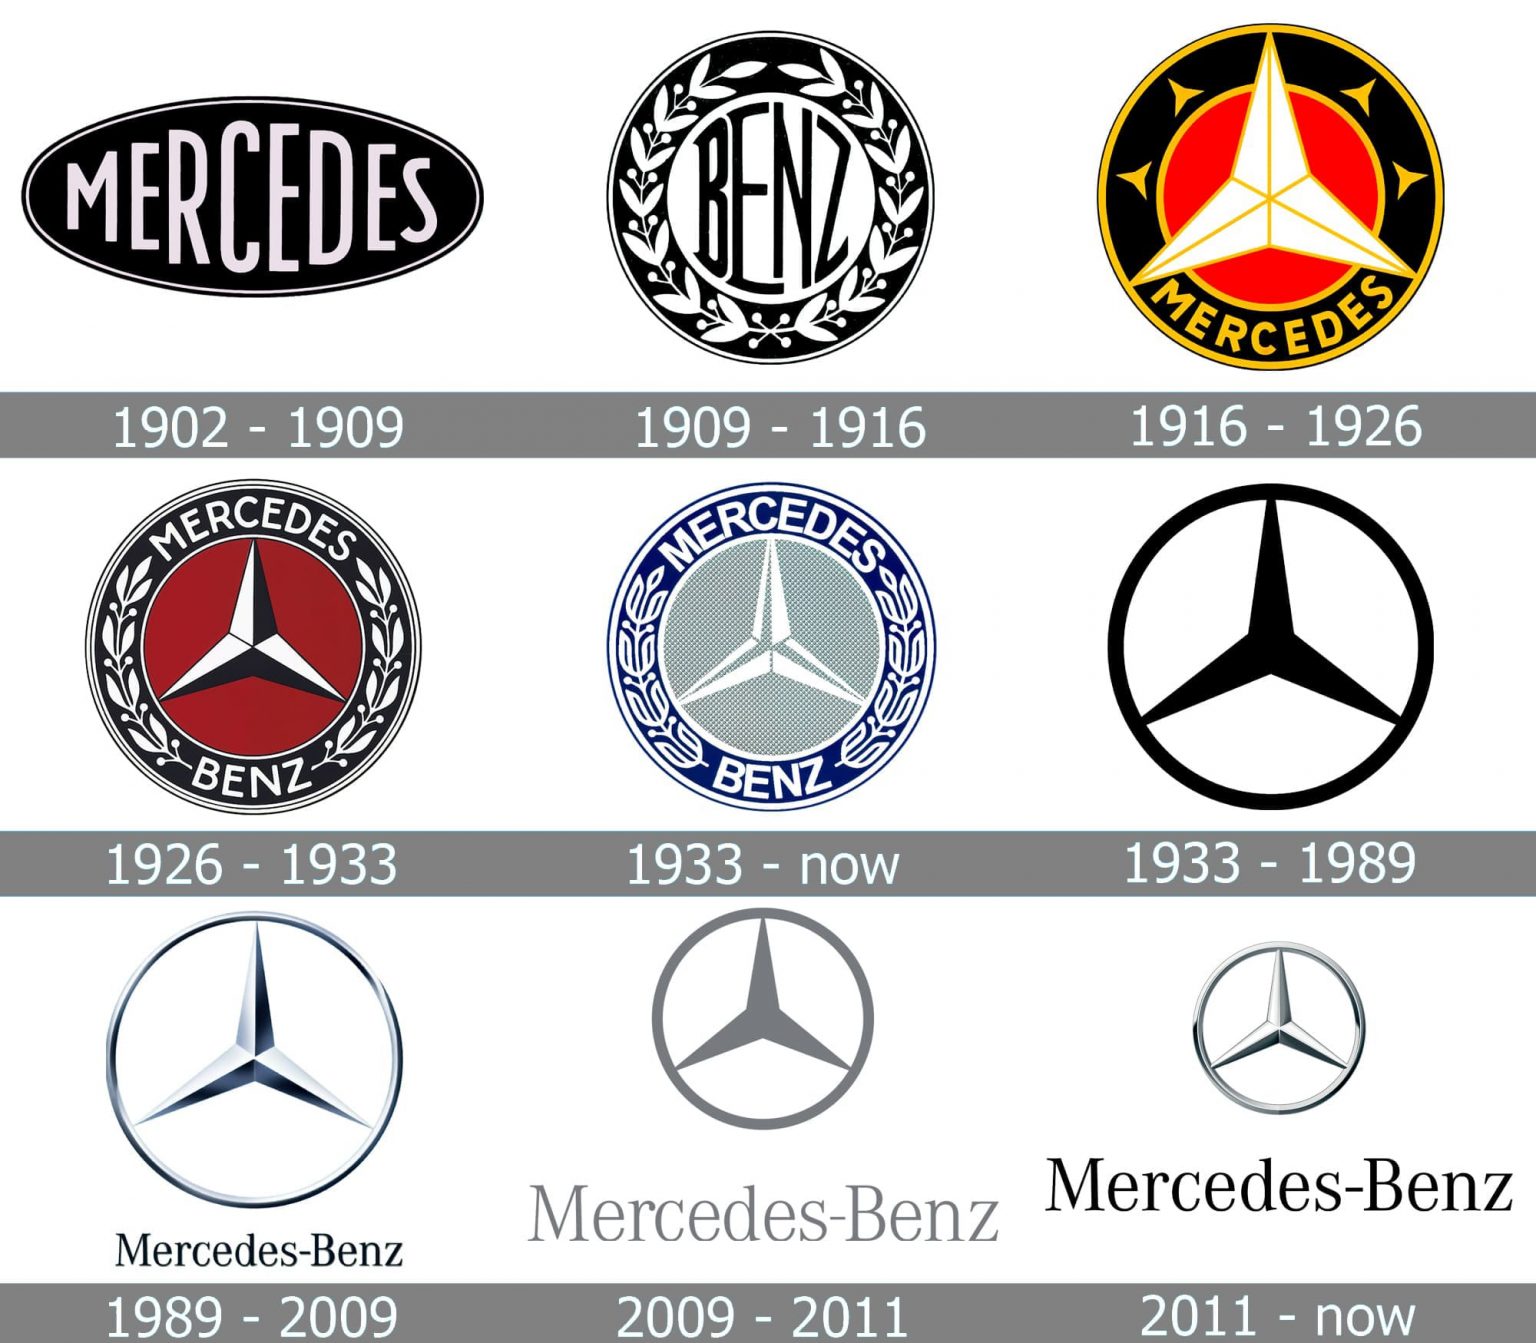 Mercedes-Benz image